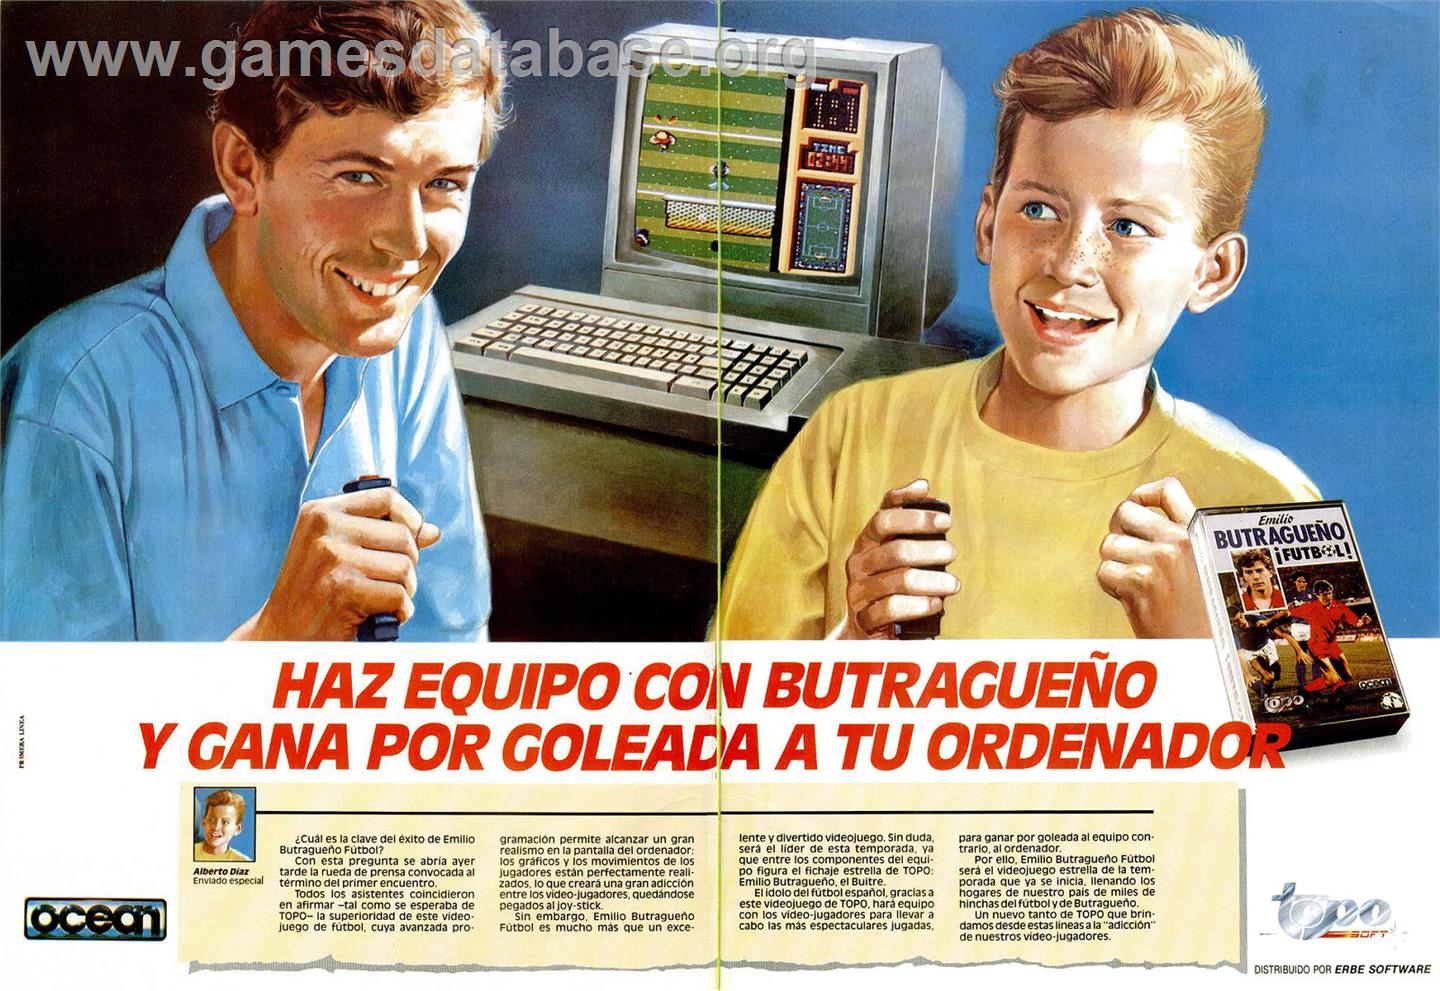 Emilio Butragueño Fútbol - MSX 2 - Artwork - Advert